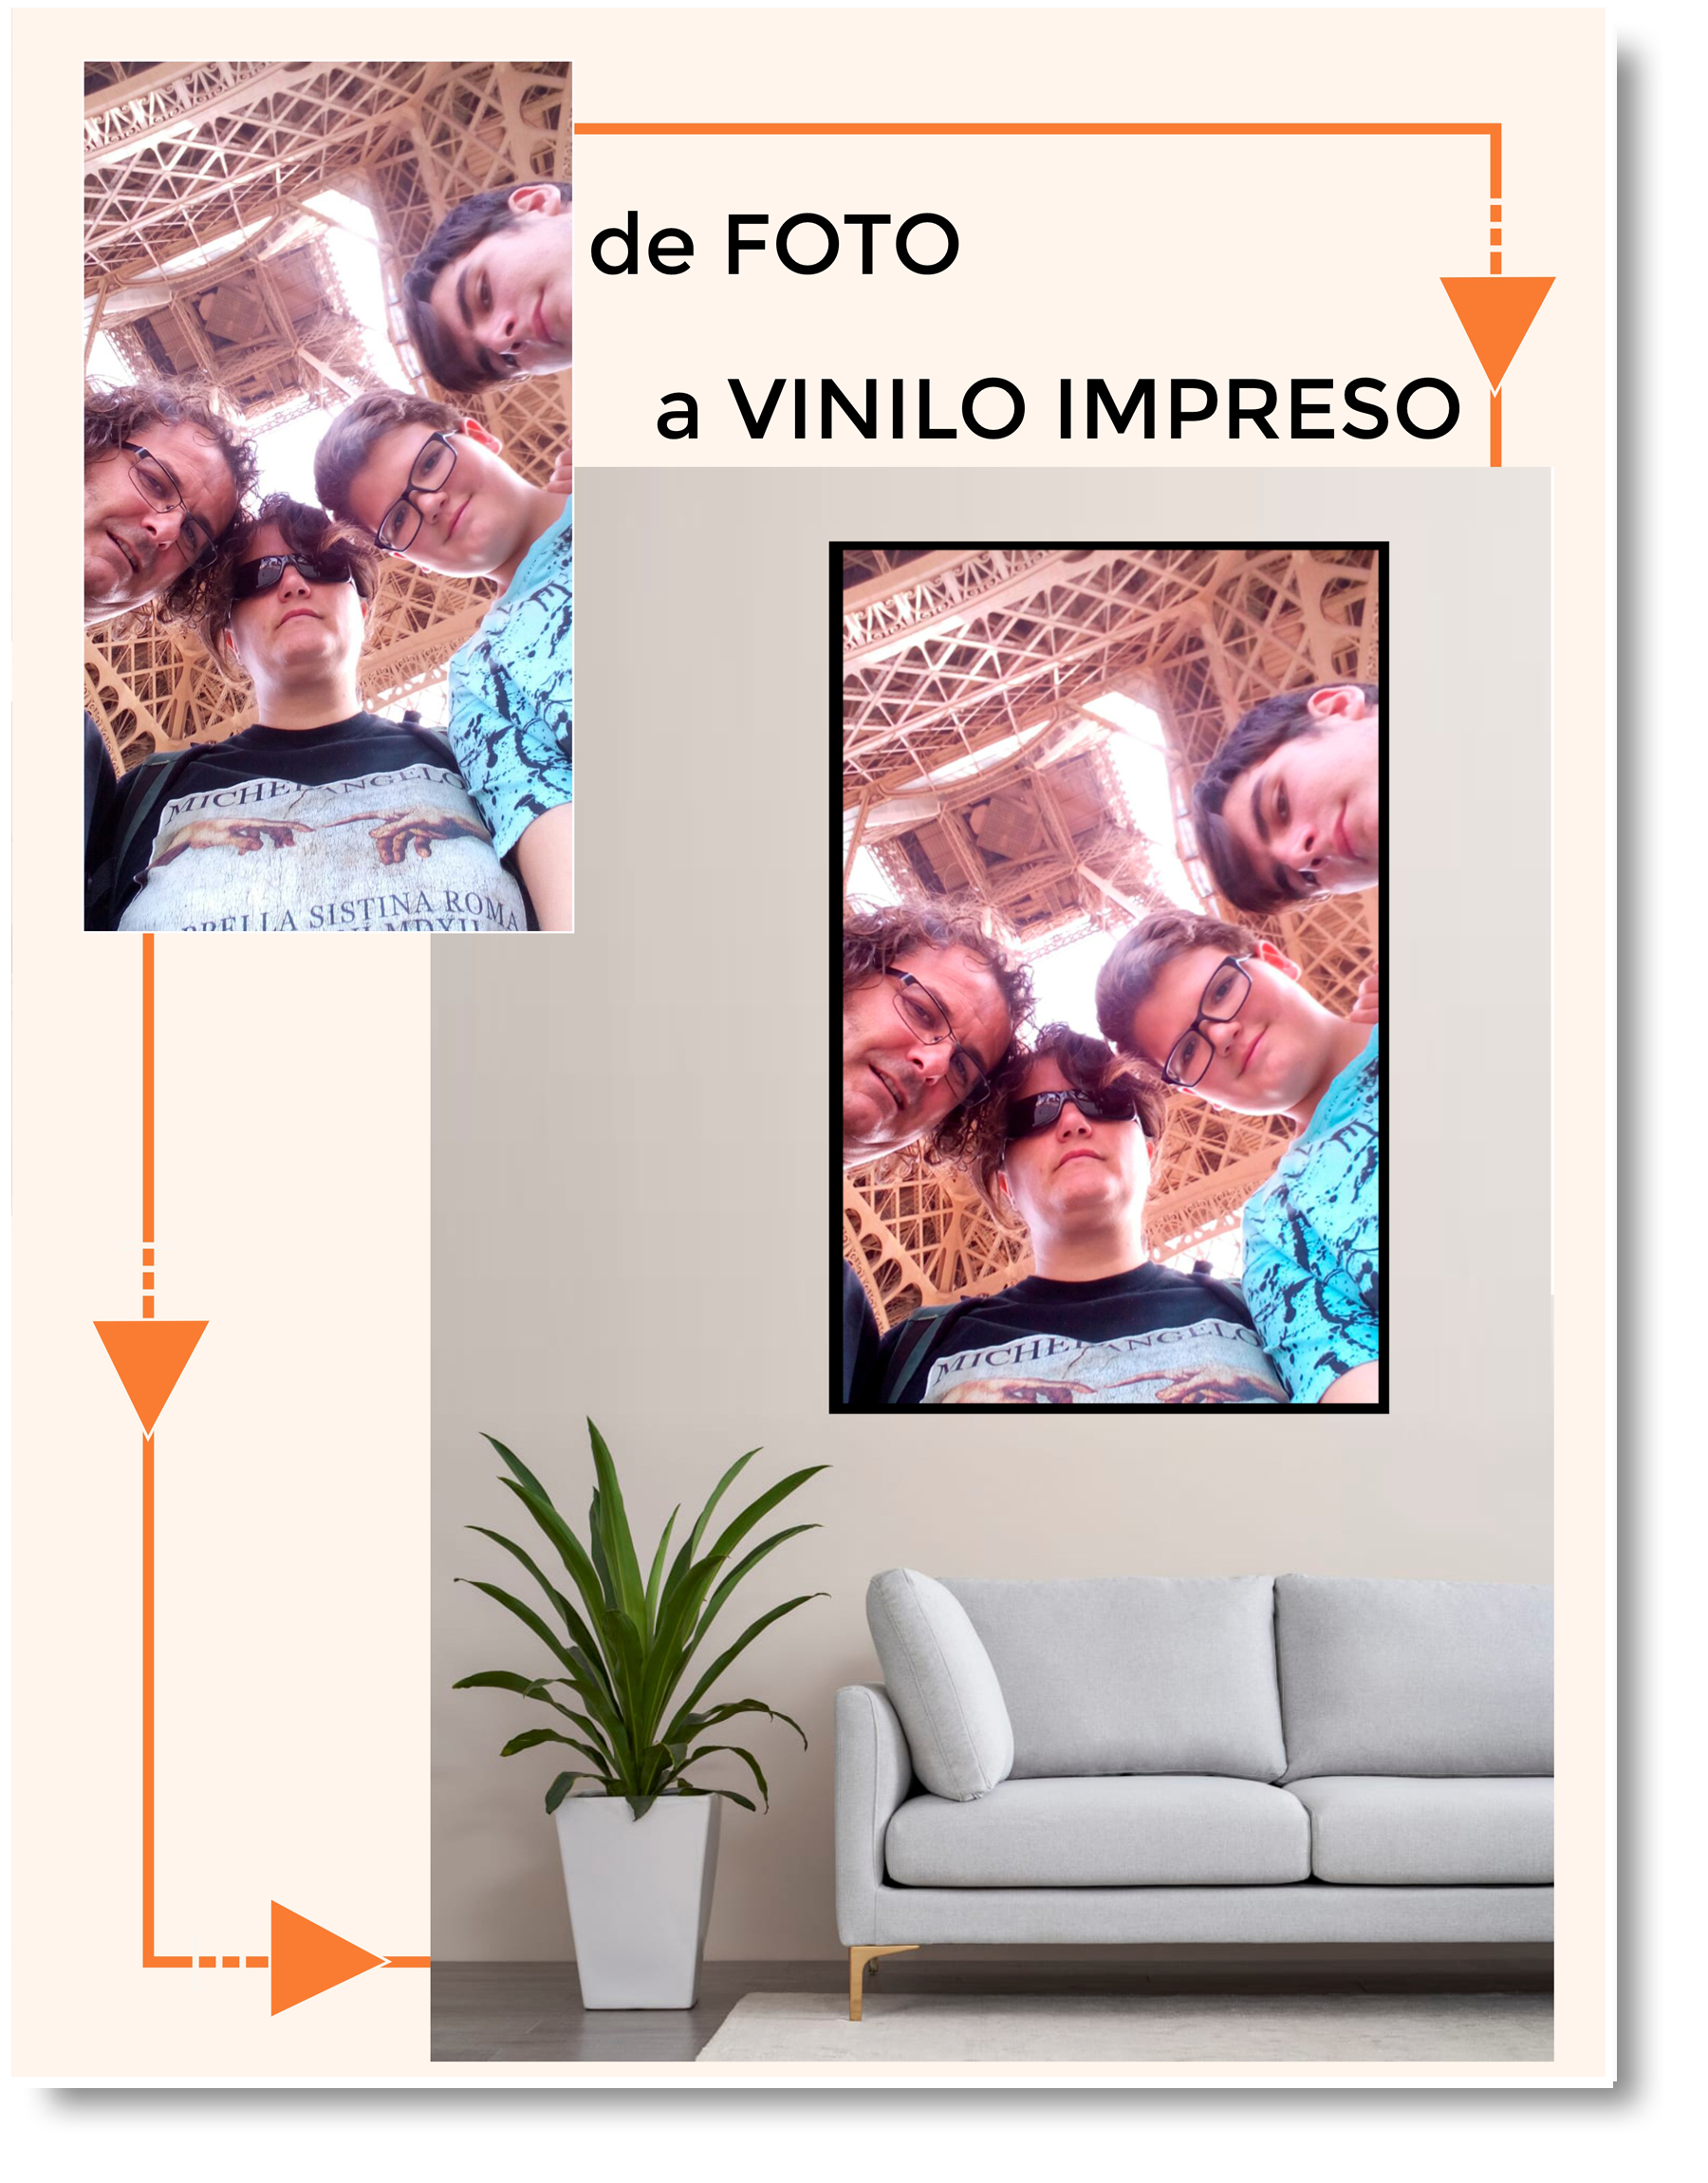 Vinilo personalizado: de FOTO a VINILO IMPRESO - tokPersonal